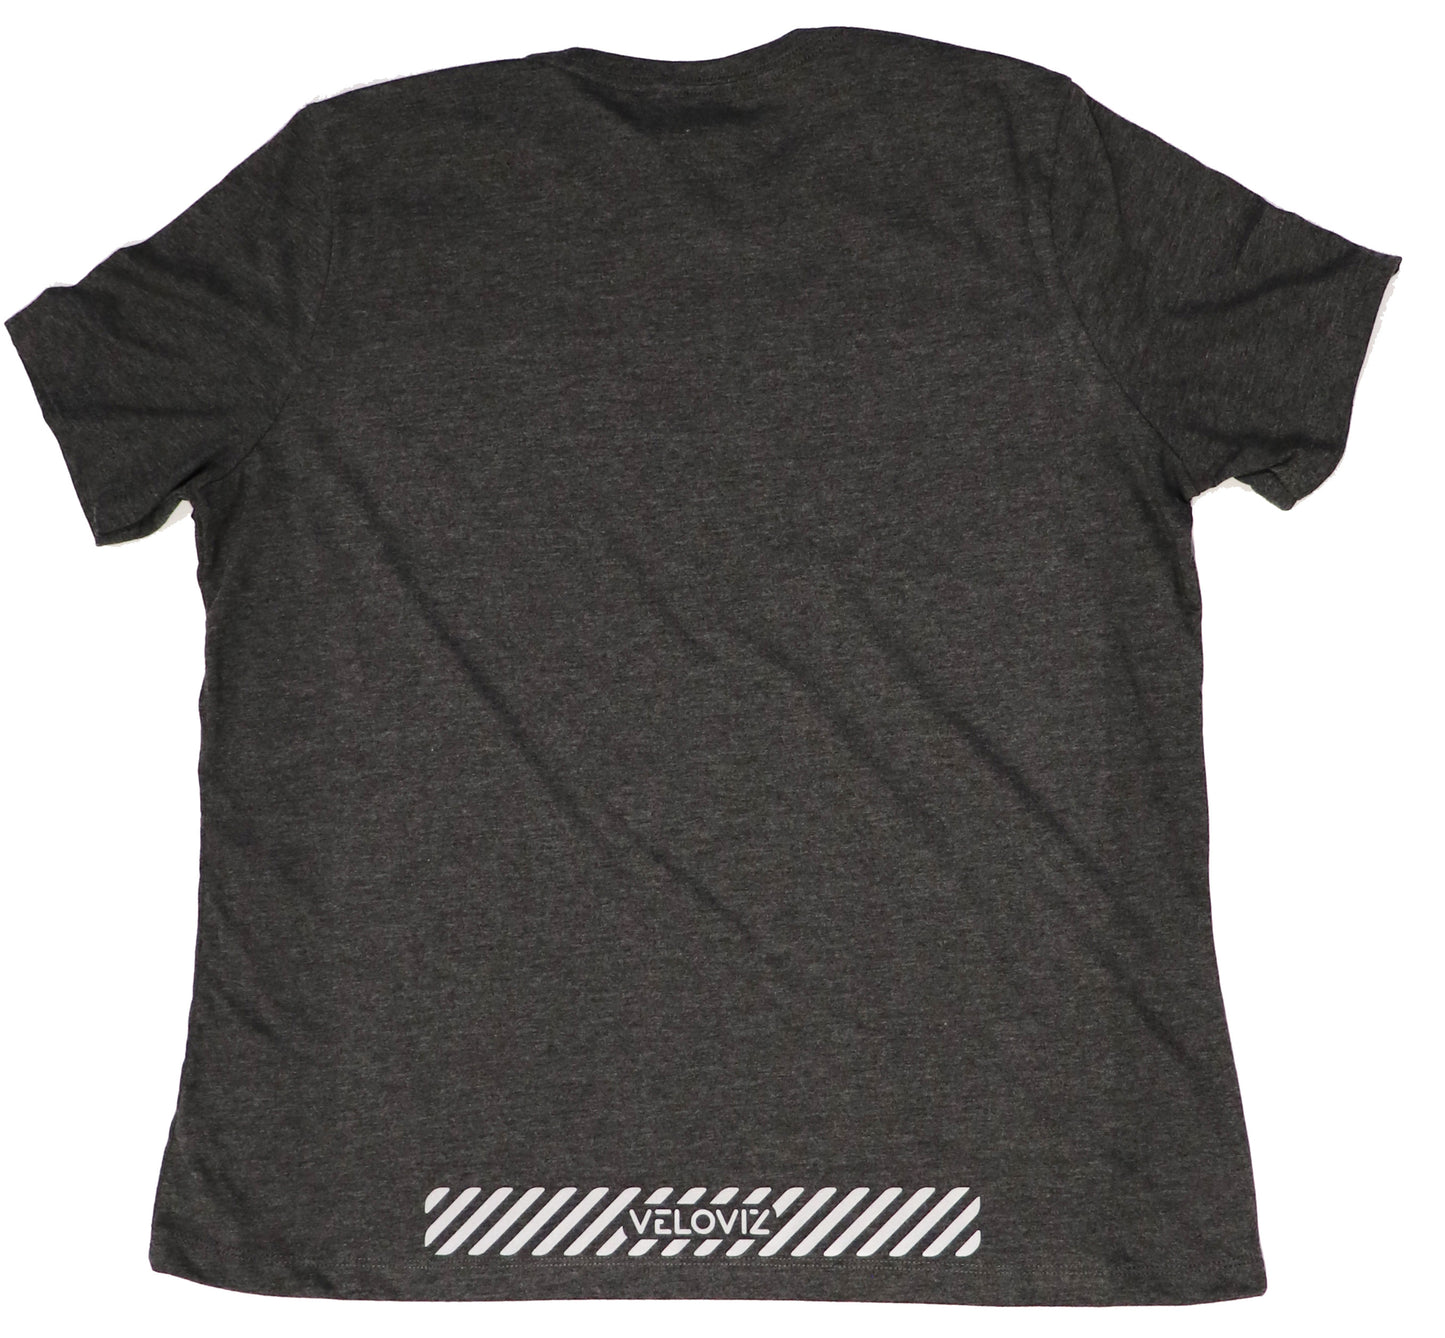 Reflective T Shirts - Simplicitee - Grey (Womens)